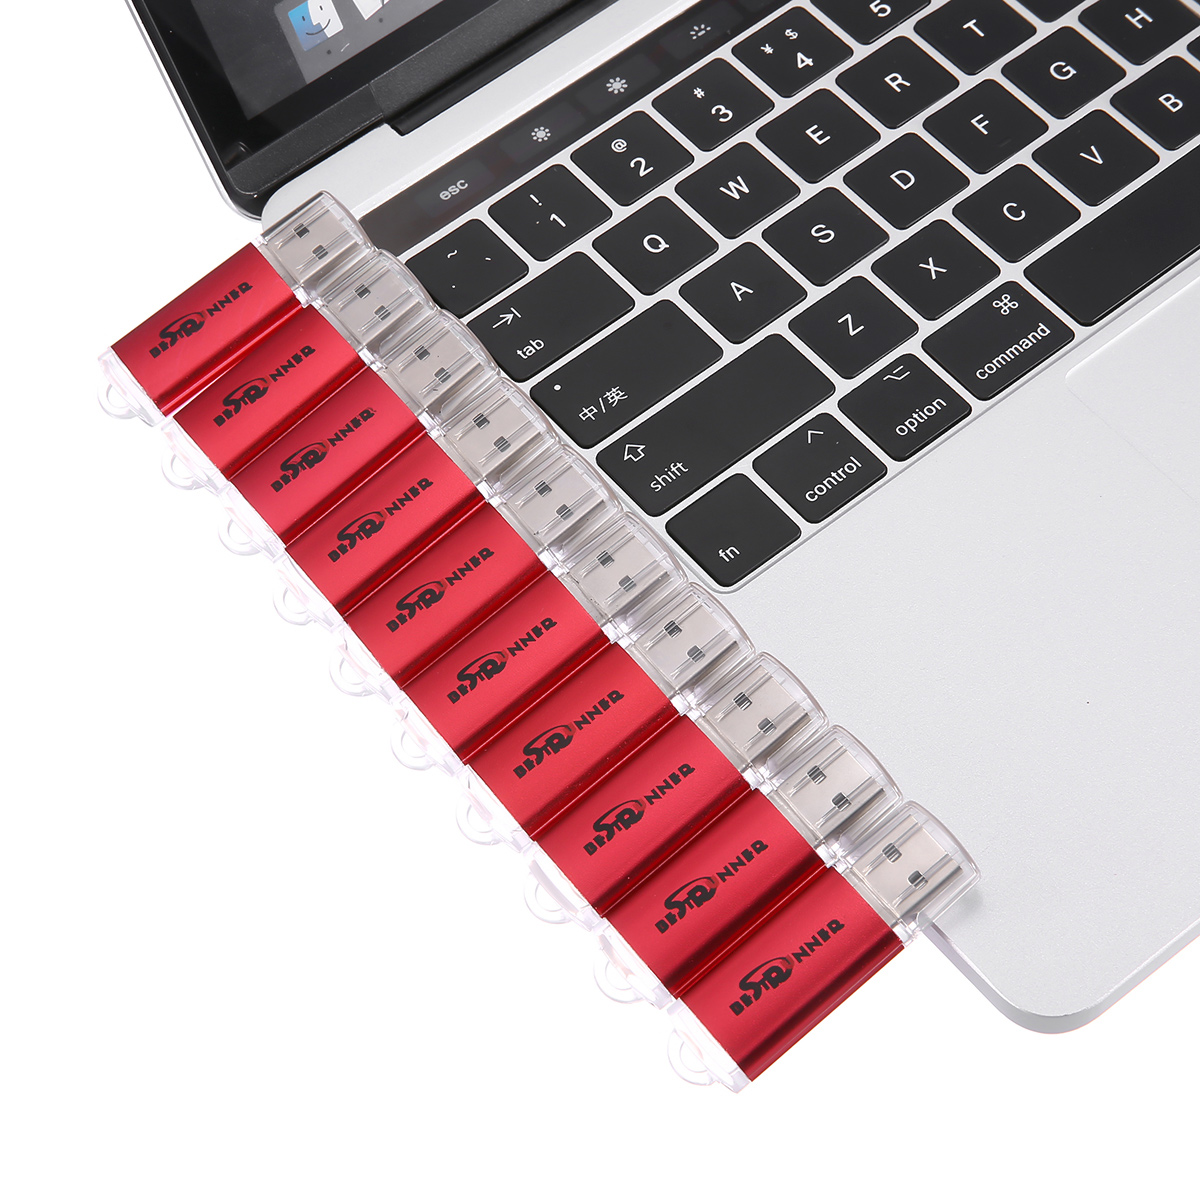 Bestrunner-10Pcs-128MB-USB-20-Flash-Drive-Candy-Red-Color-Memory-Pen-Storage-Thumb-U-Disk-1939063-2